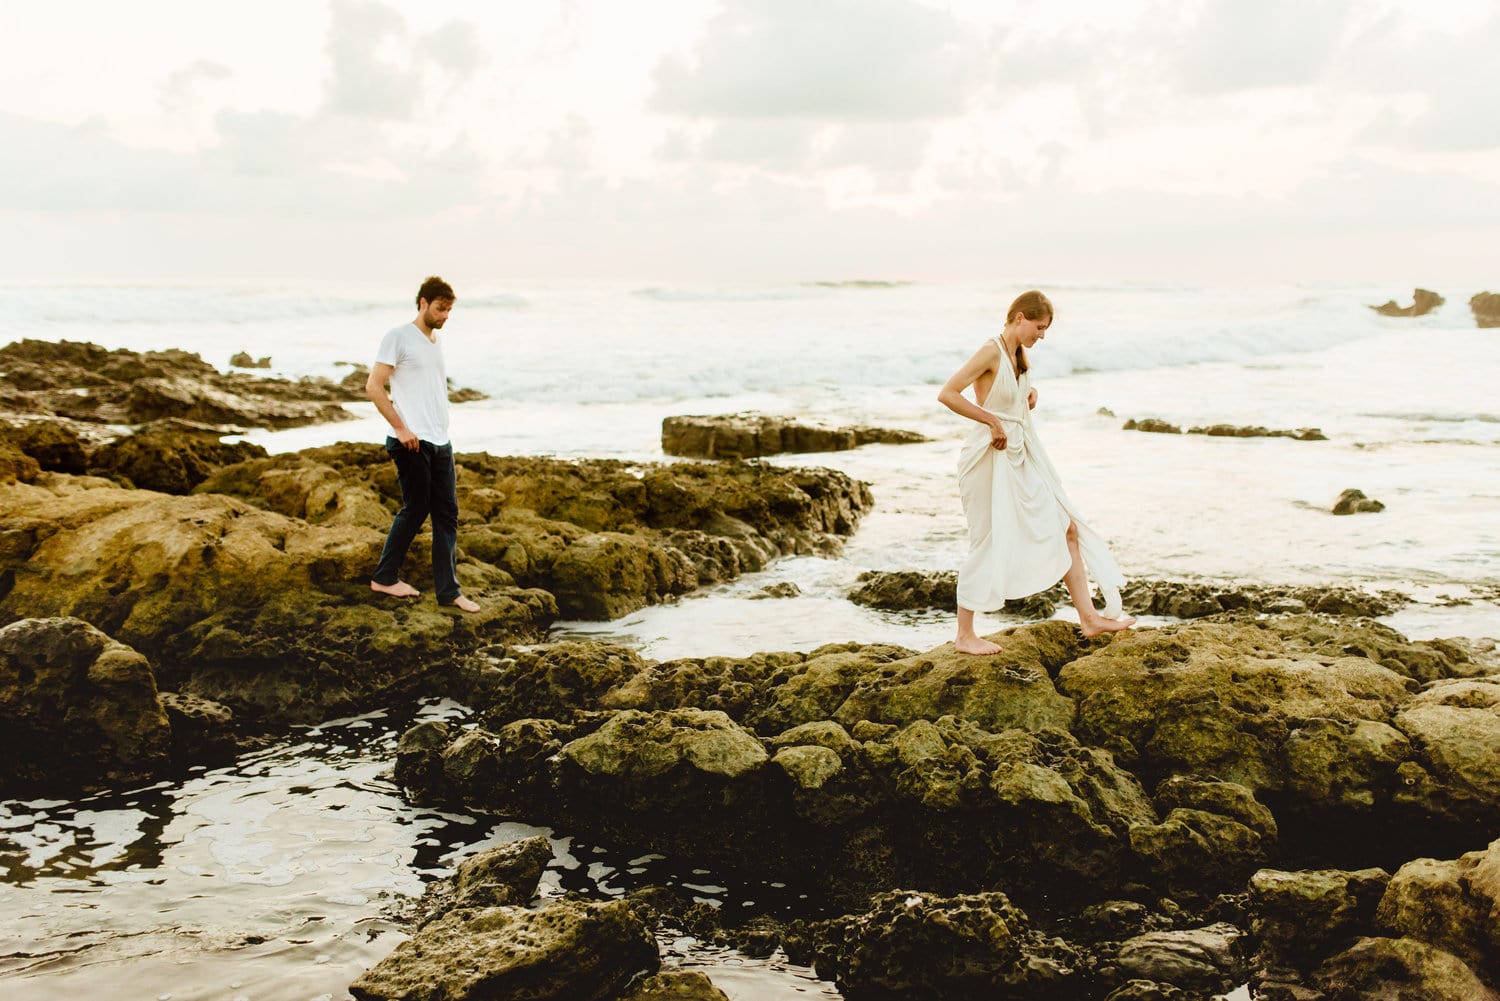 Bride and groom walk on rocks along the shore in Santa Teresa, Costa Rica.